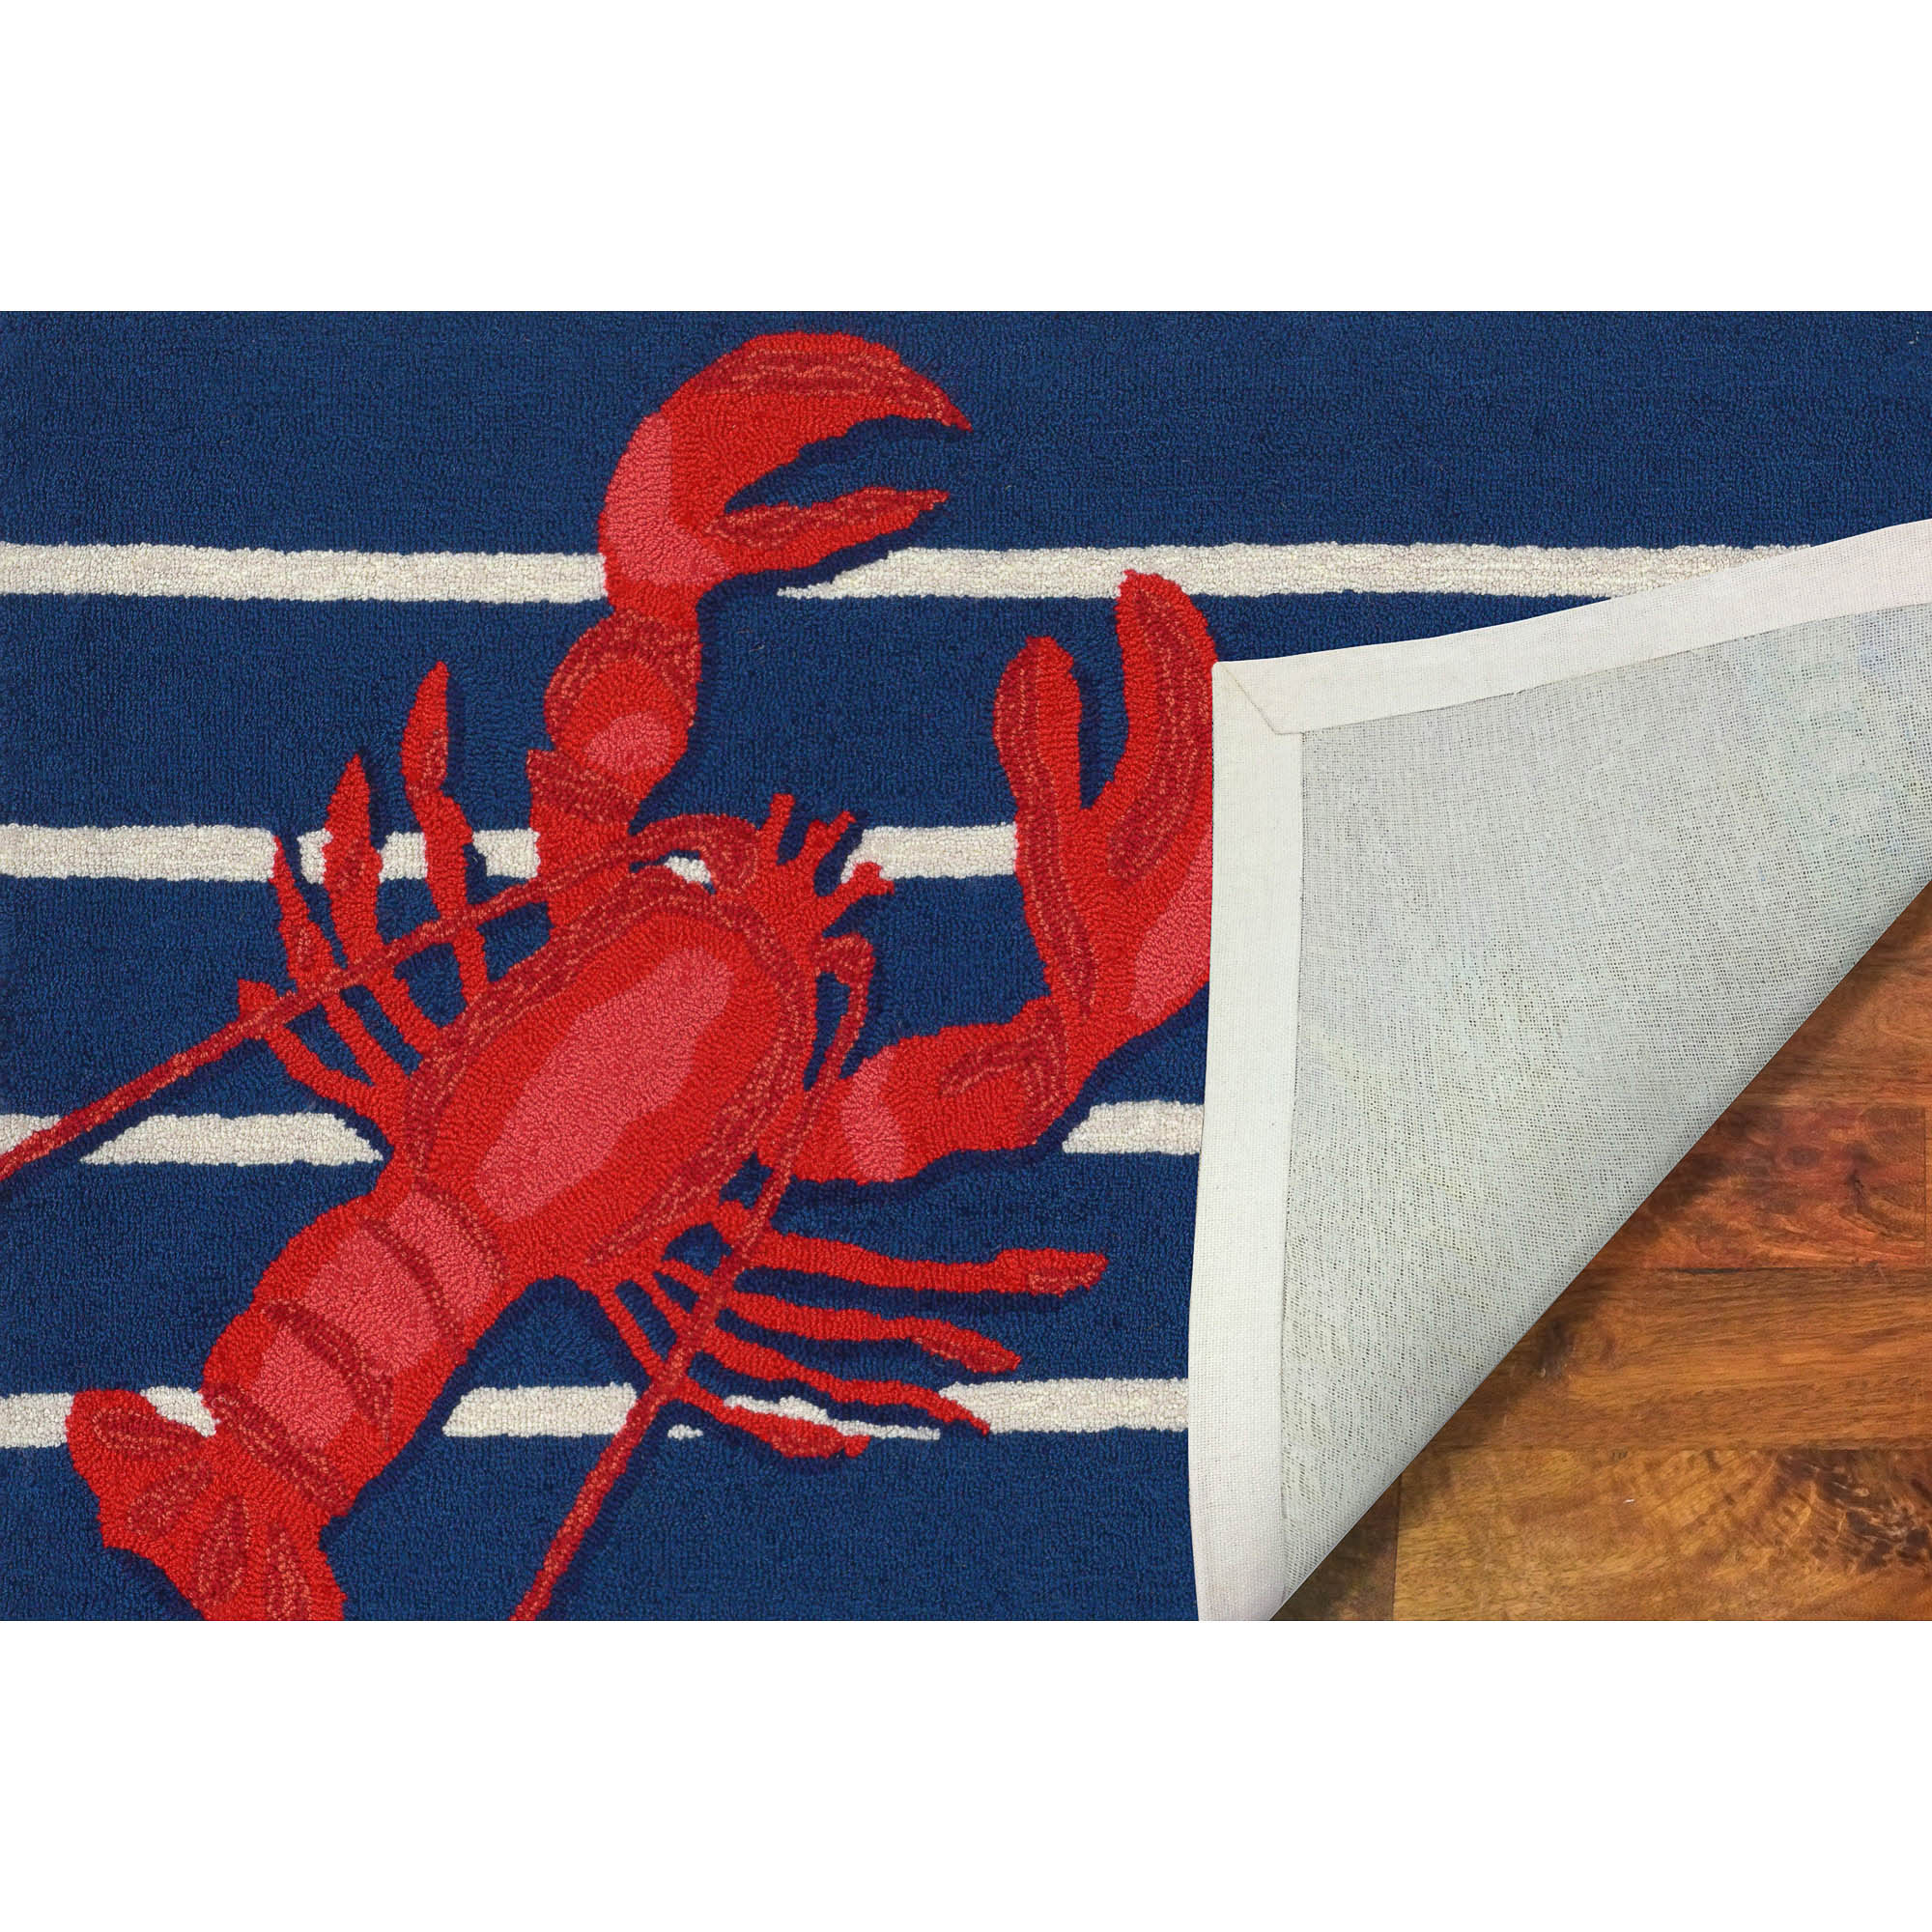 FRONTPORCH Lobster on Stripes Navy